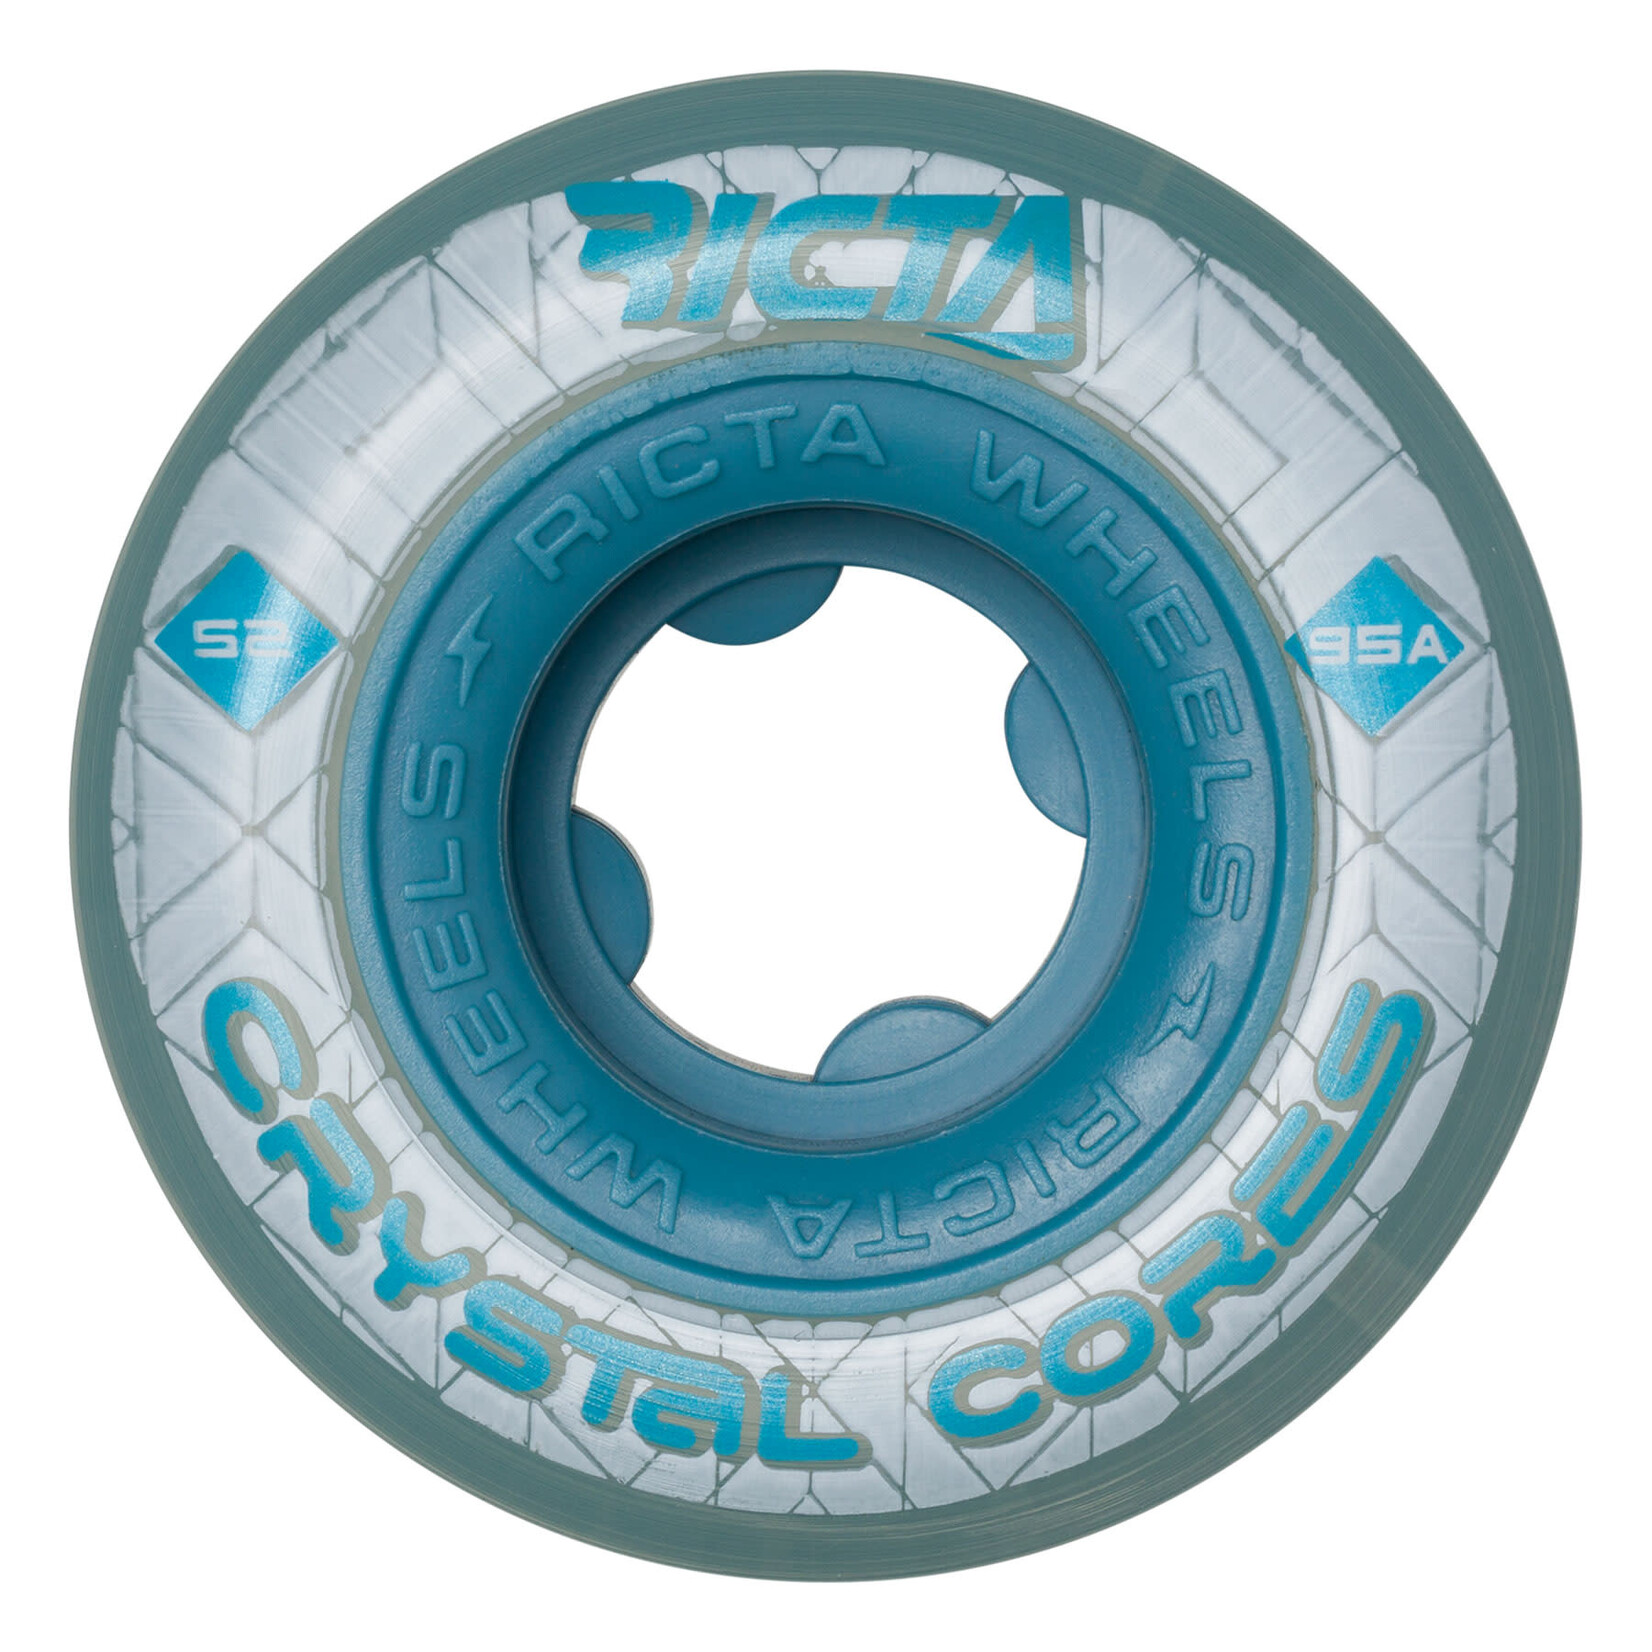 Ricta Ricta Crystal Cores 95a Skateboard Wheels - 52mm